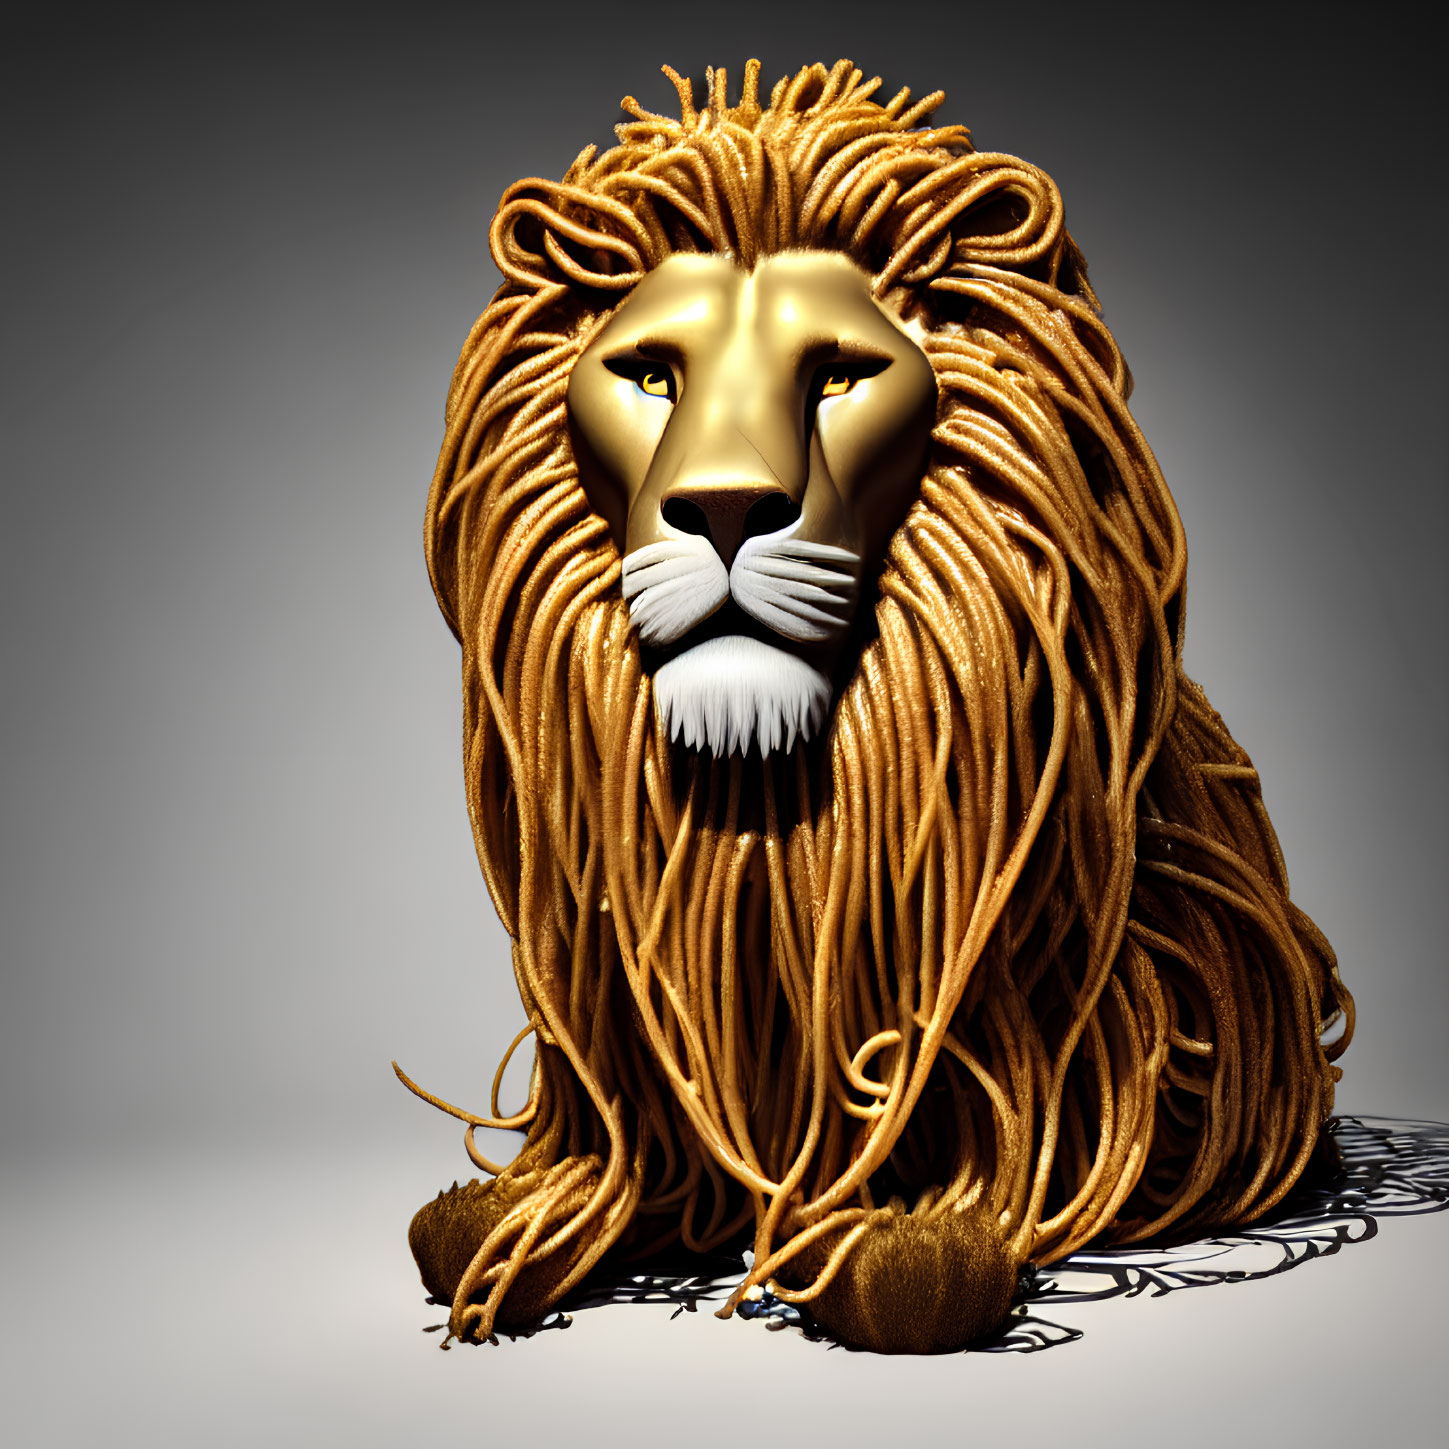 Golden Lion Sculpture with Flowing Mane and Intense Gaze